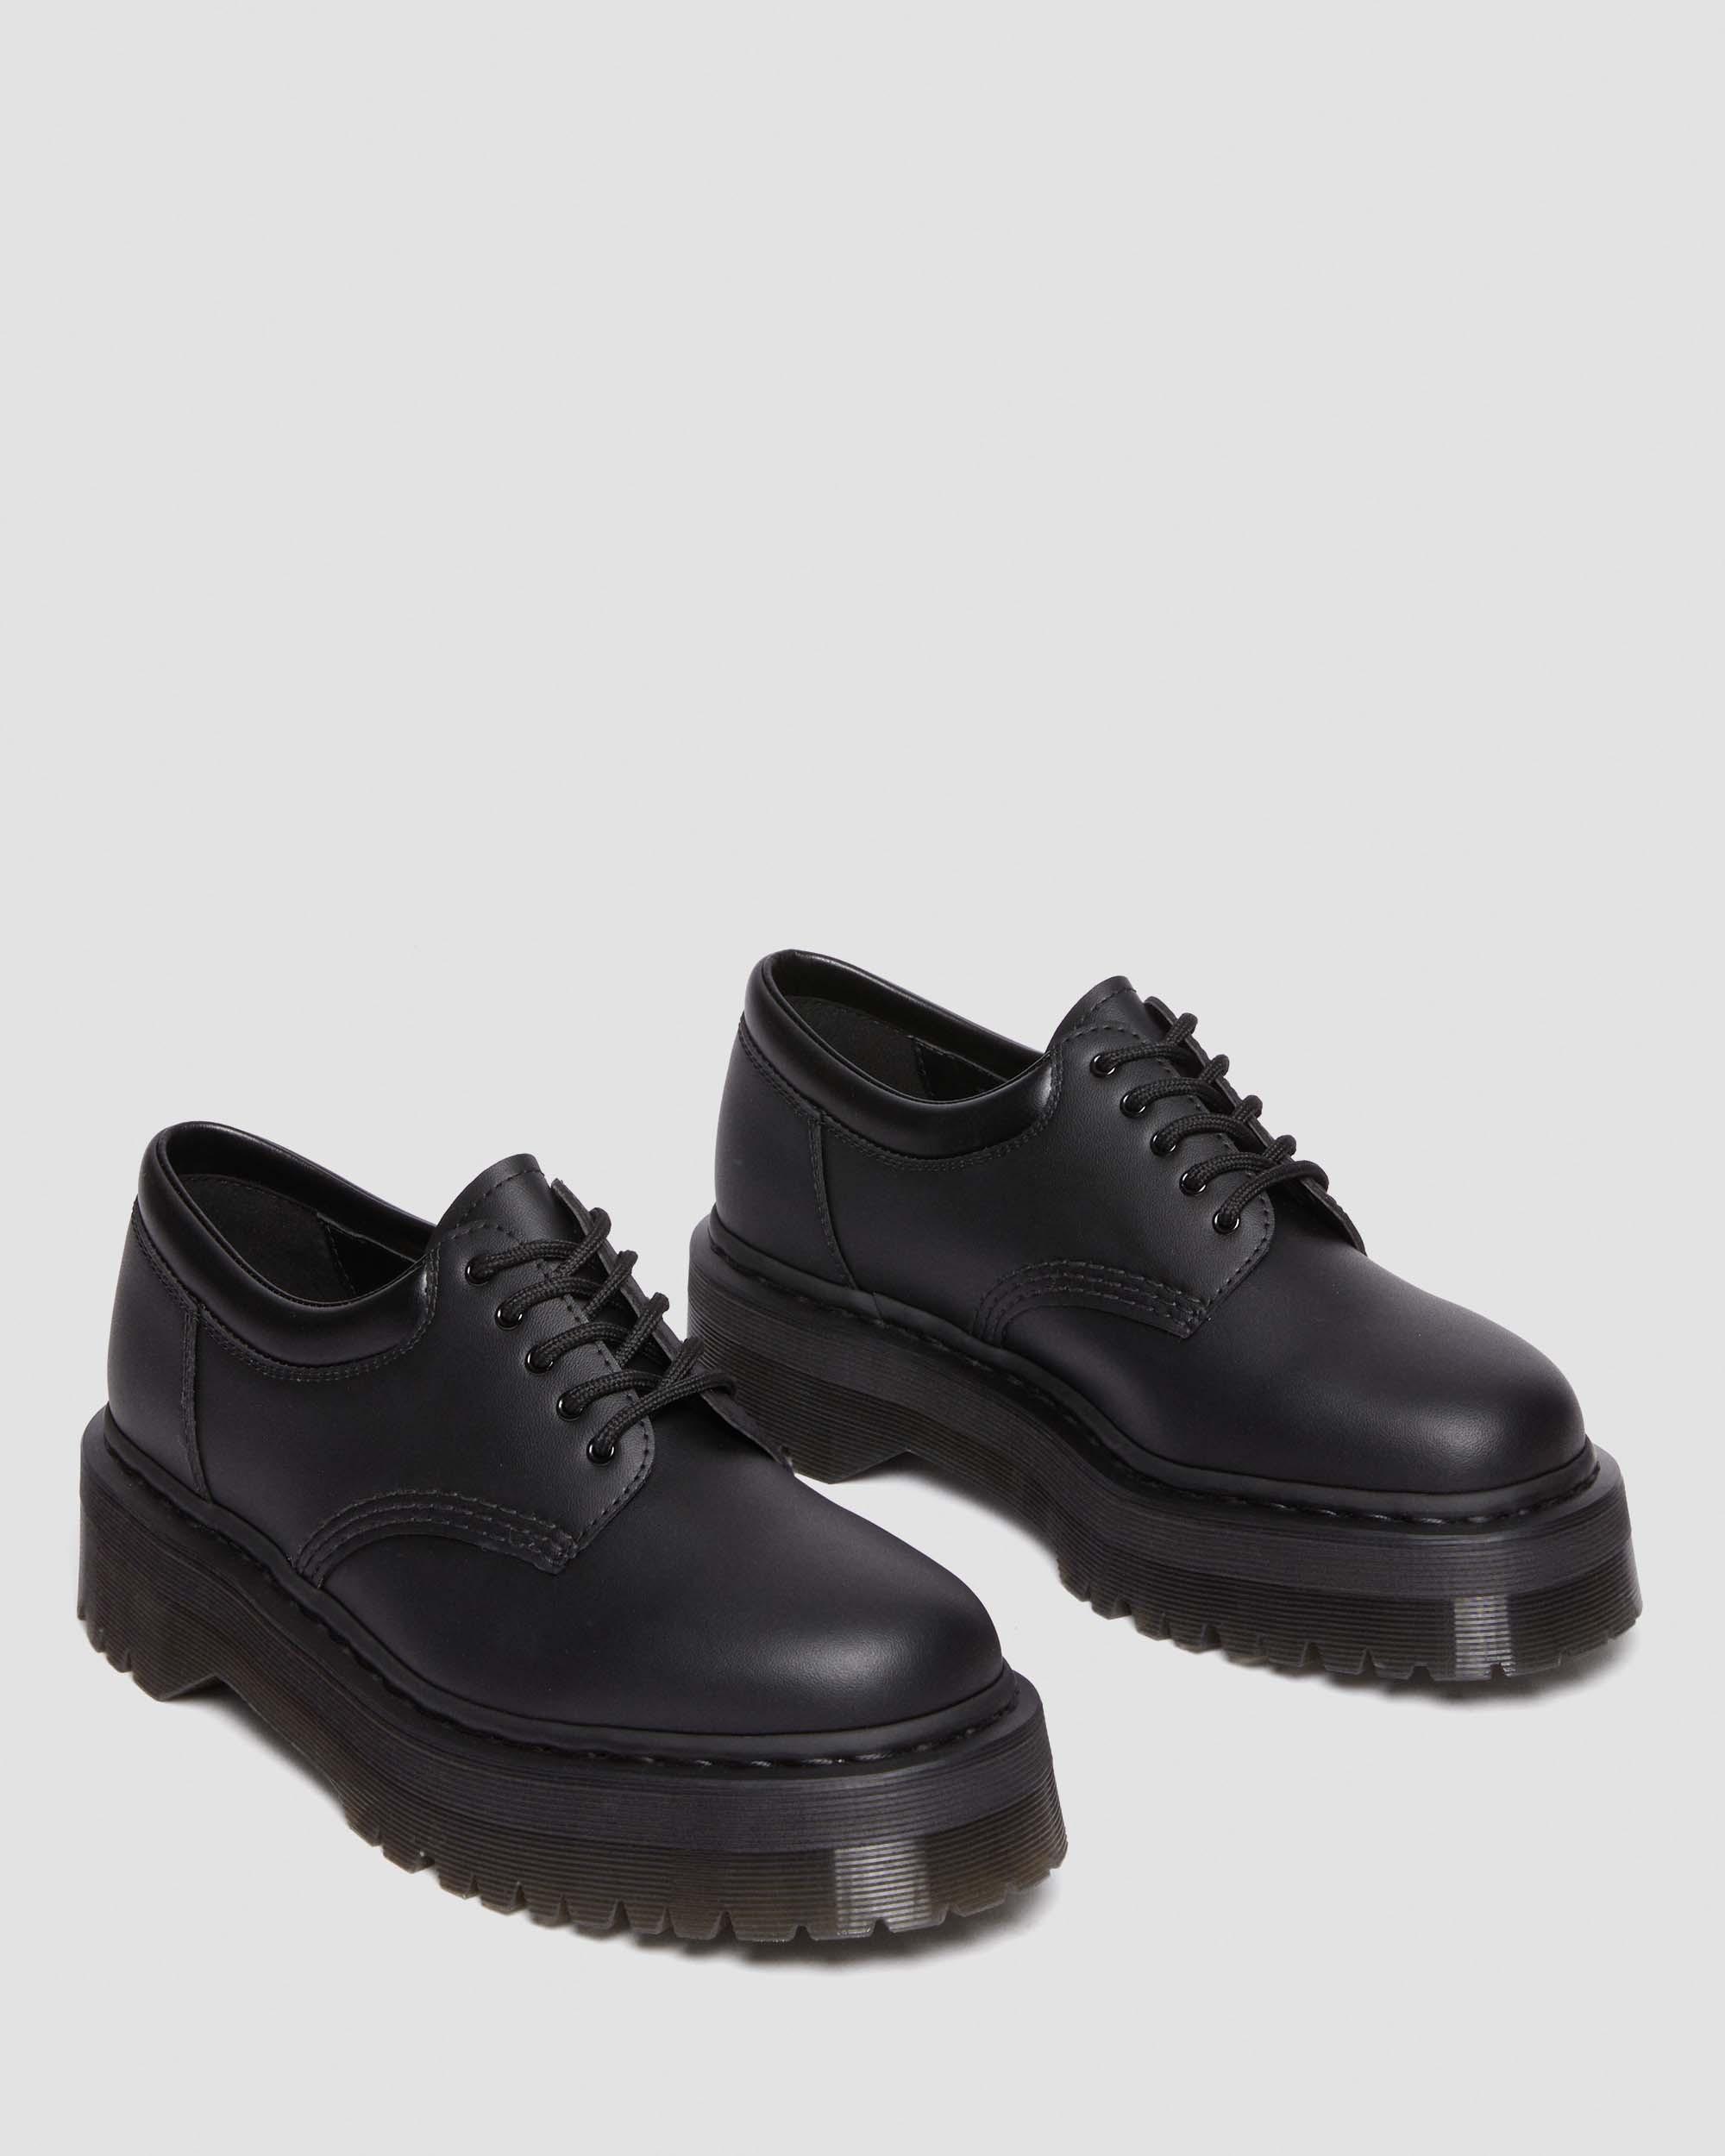 Vegan 8053 Quad Mono Leather Shoes in Black